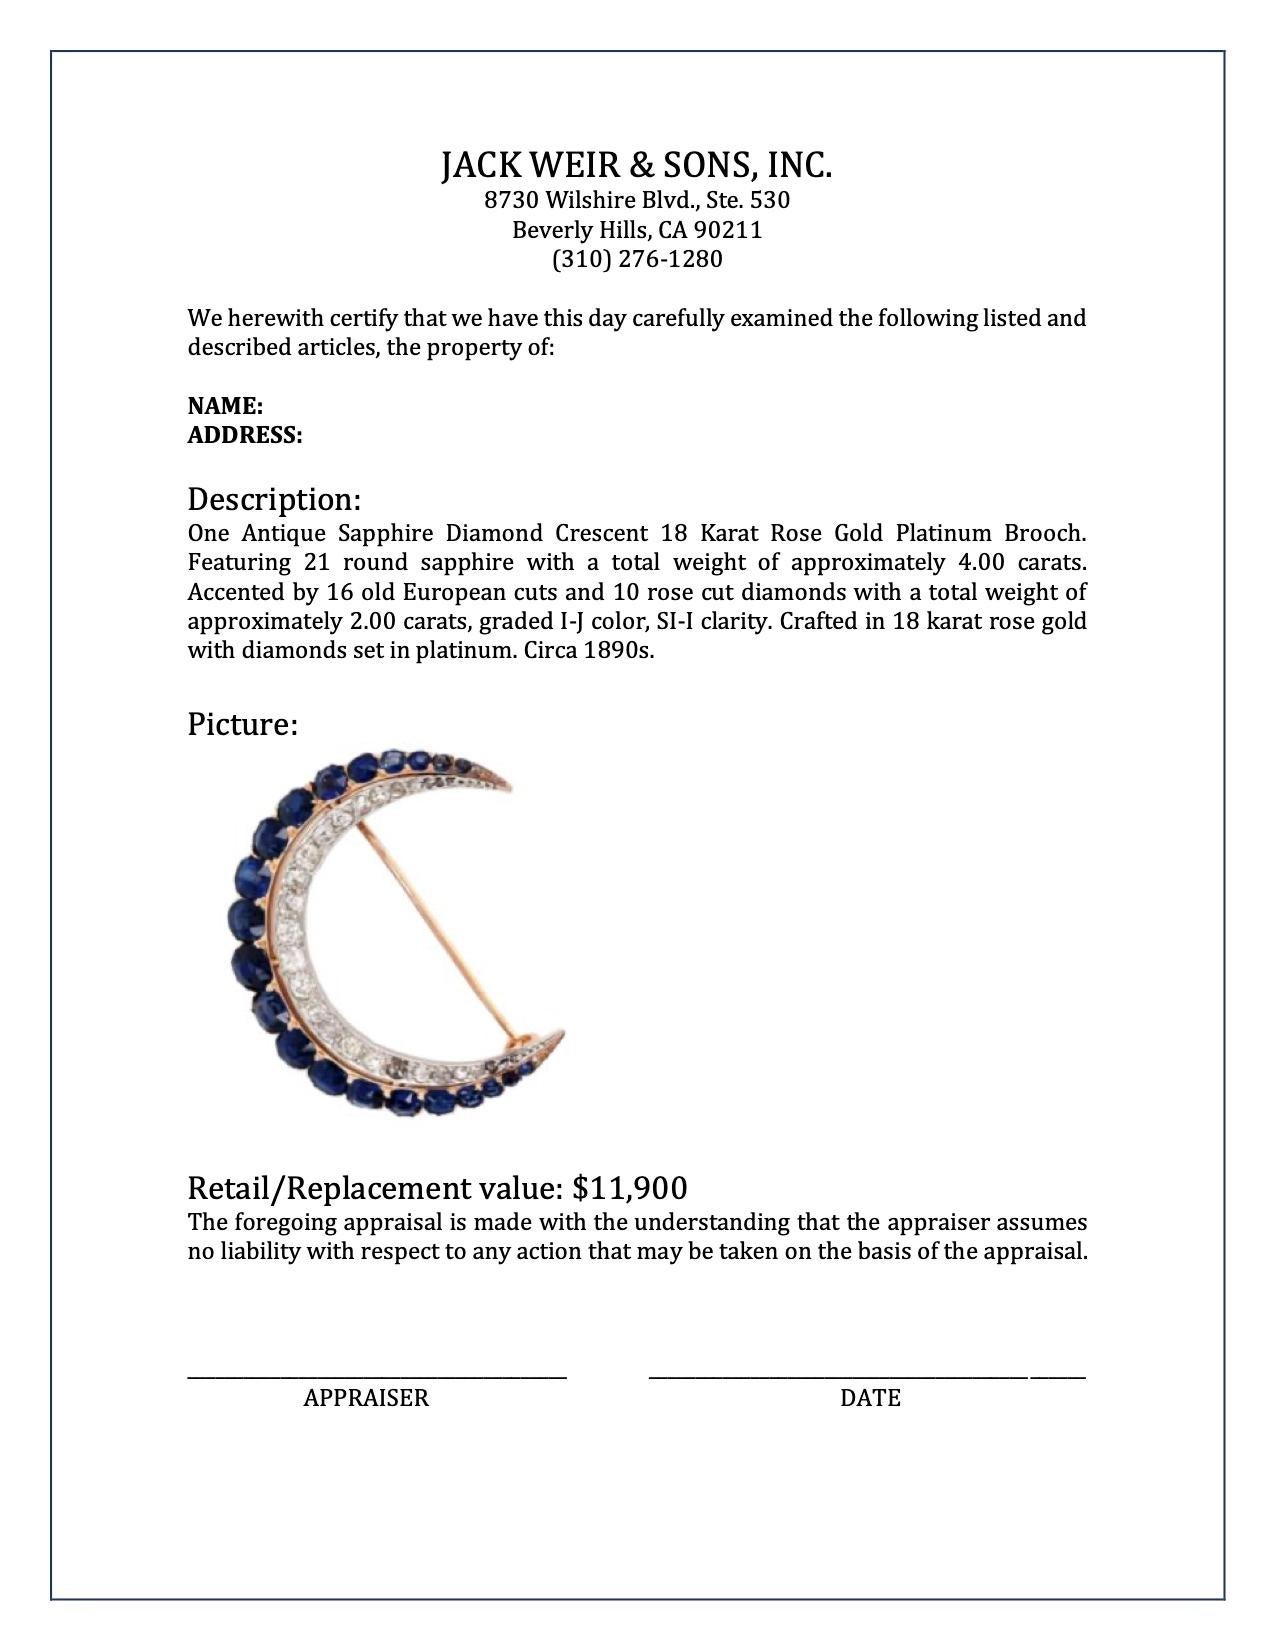 Women's or Men's Antique Sapphire Diamond Crescent 18 Karat Rose Gold Platinum Brooch